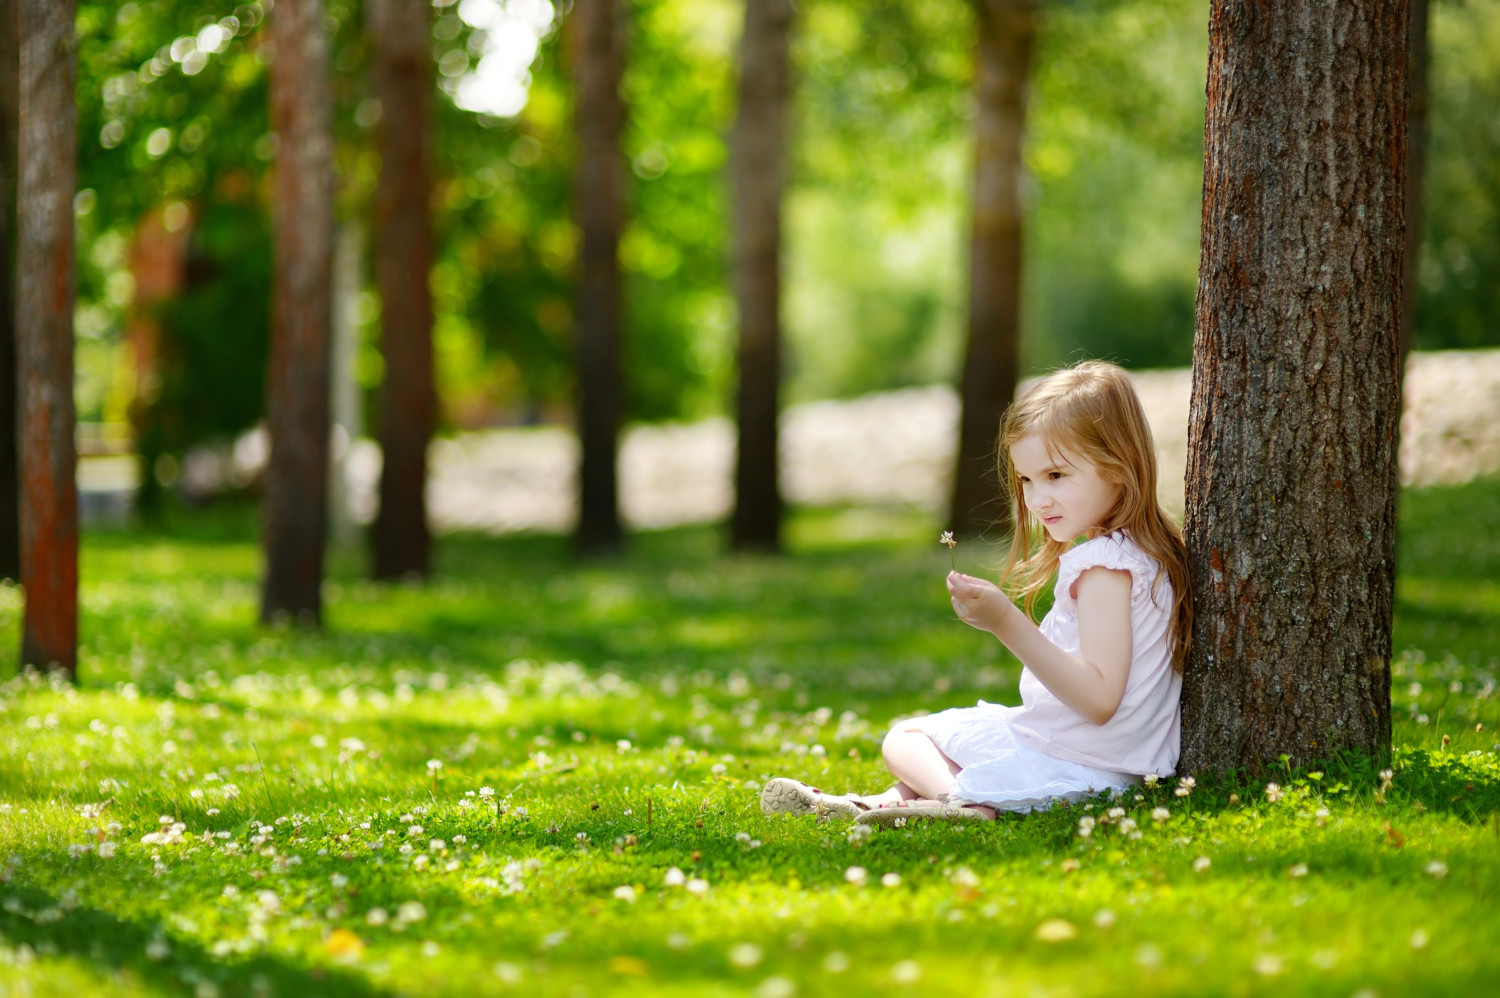 Cute little girl sitting on a clover field